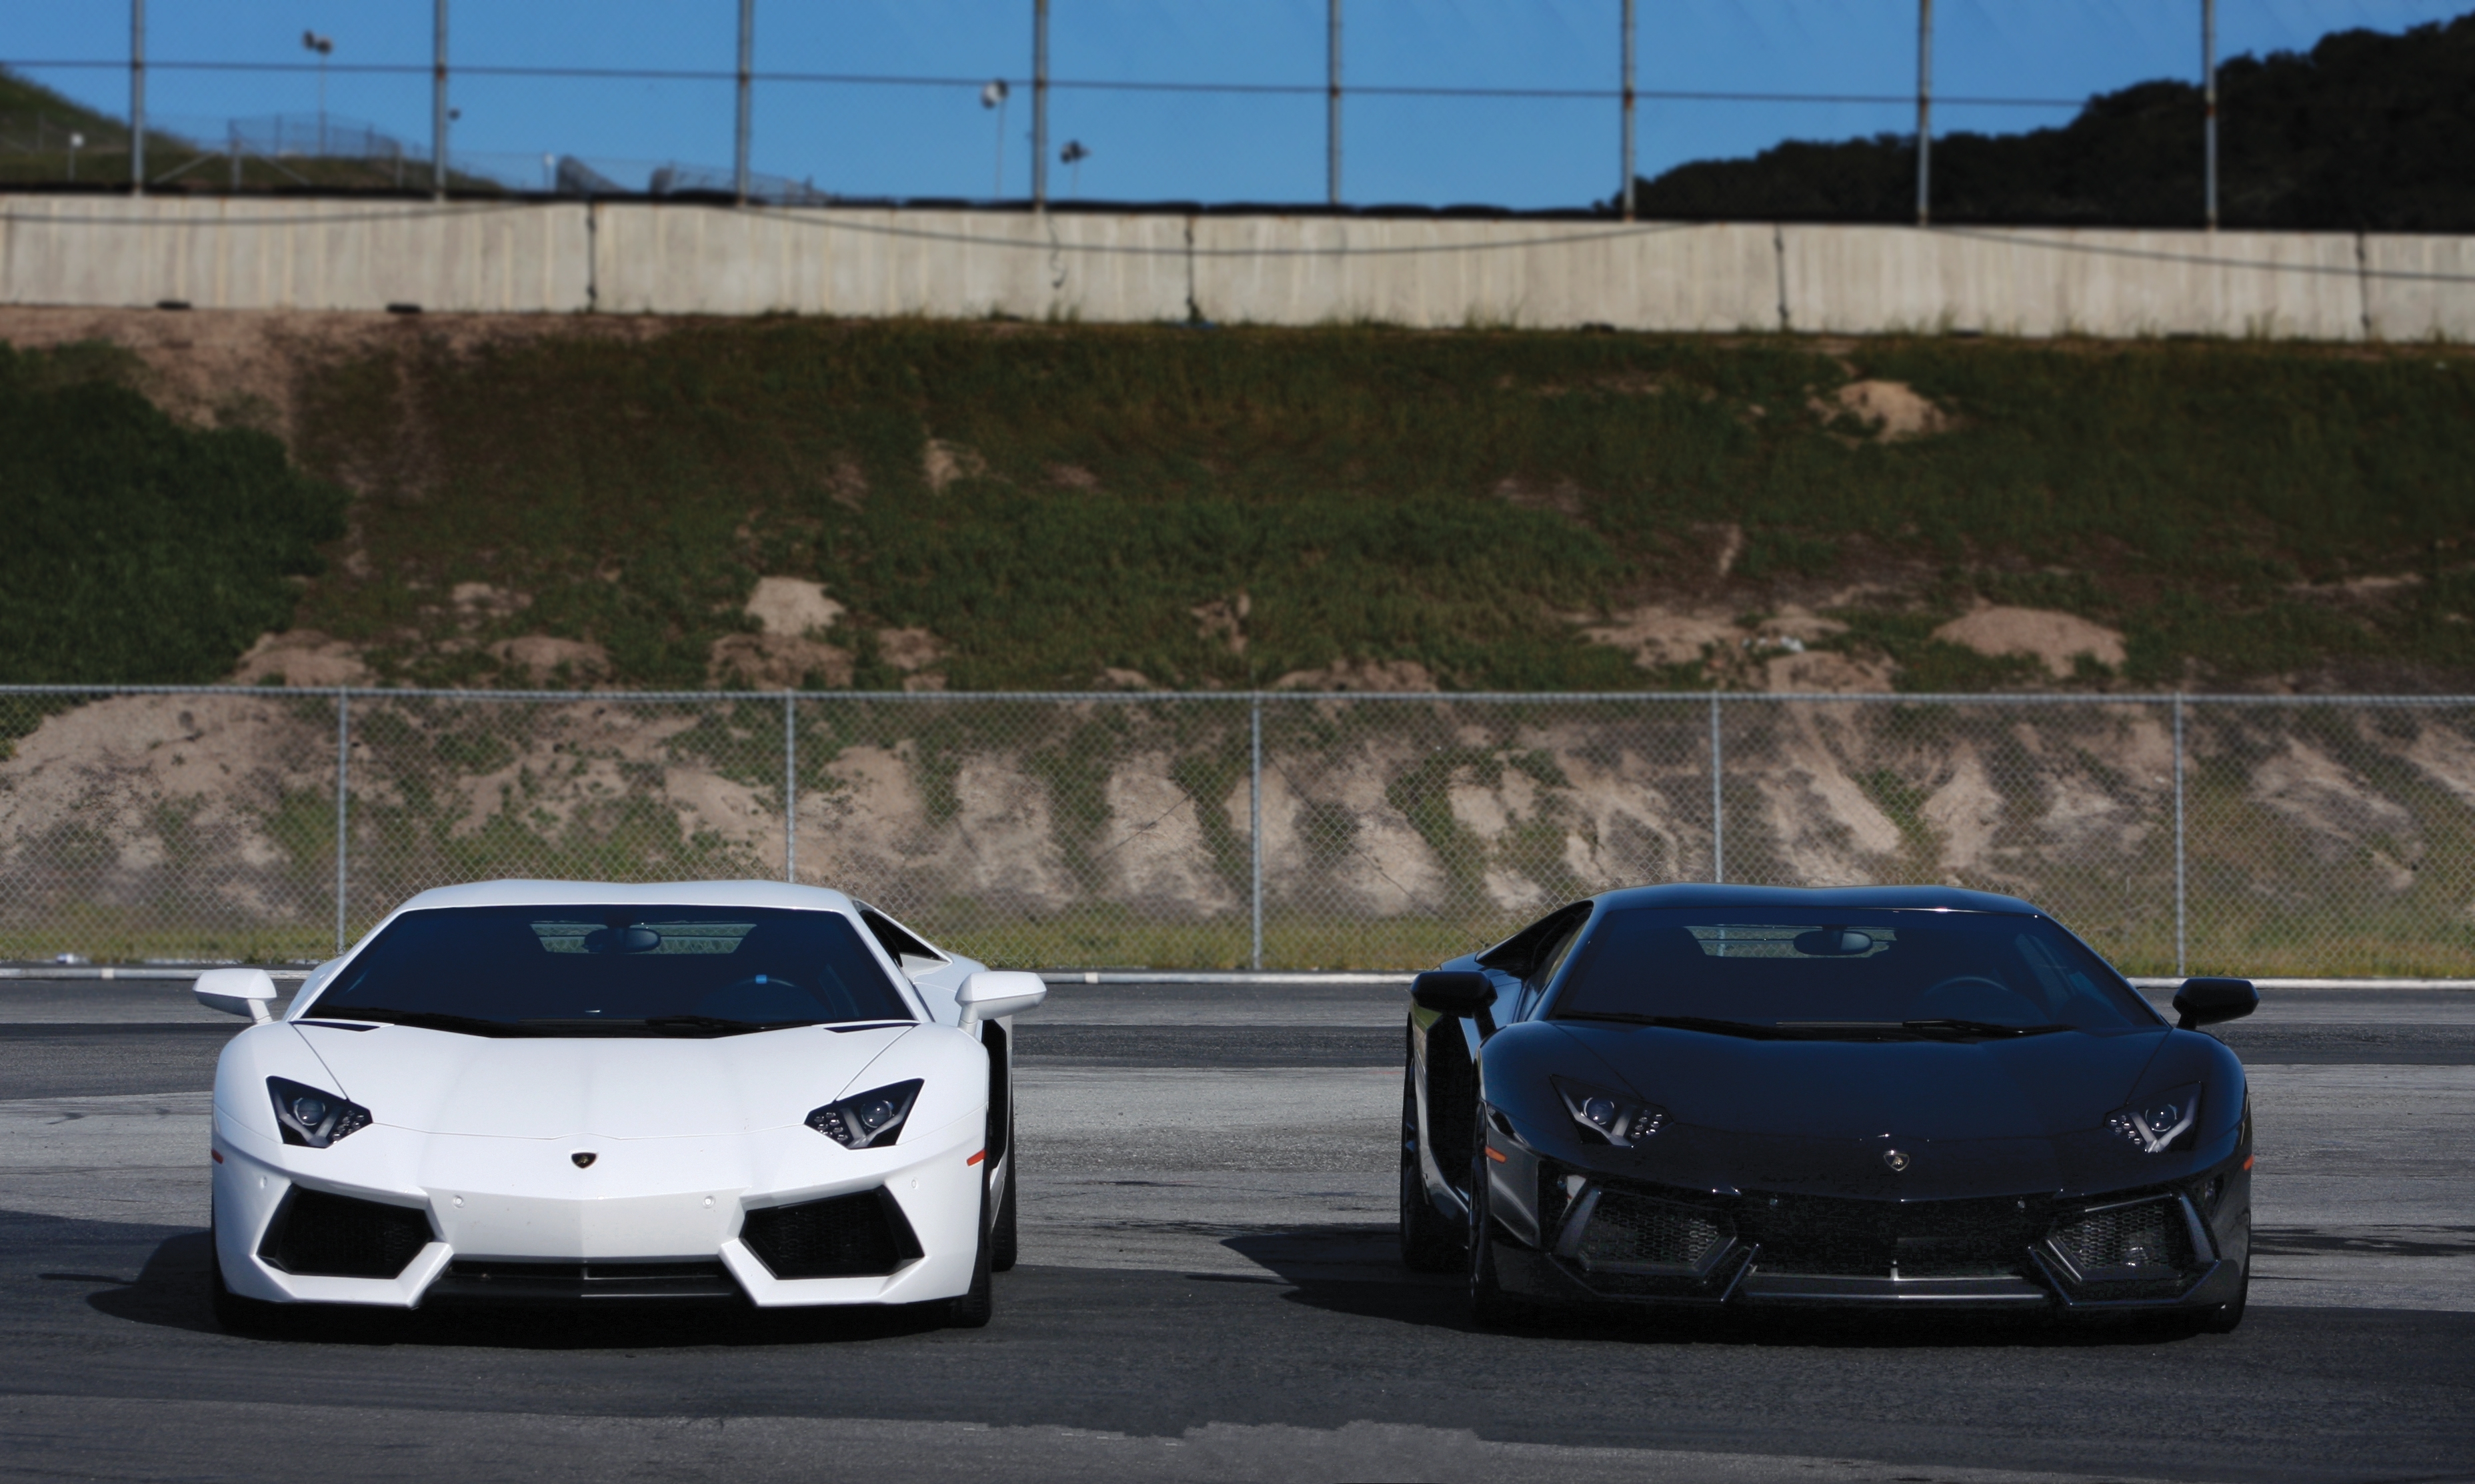 Luxury sport. Lamborghini Aventador lp700-4 белая. Lamborghini Aventador lp700 чёрный. Ламборджини Галлардо 2020. Ламборджини авентадор ЛП 700-4.